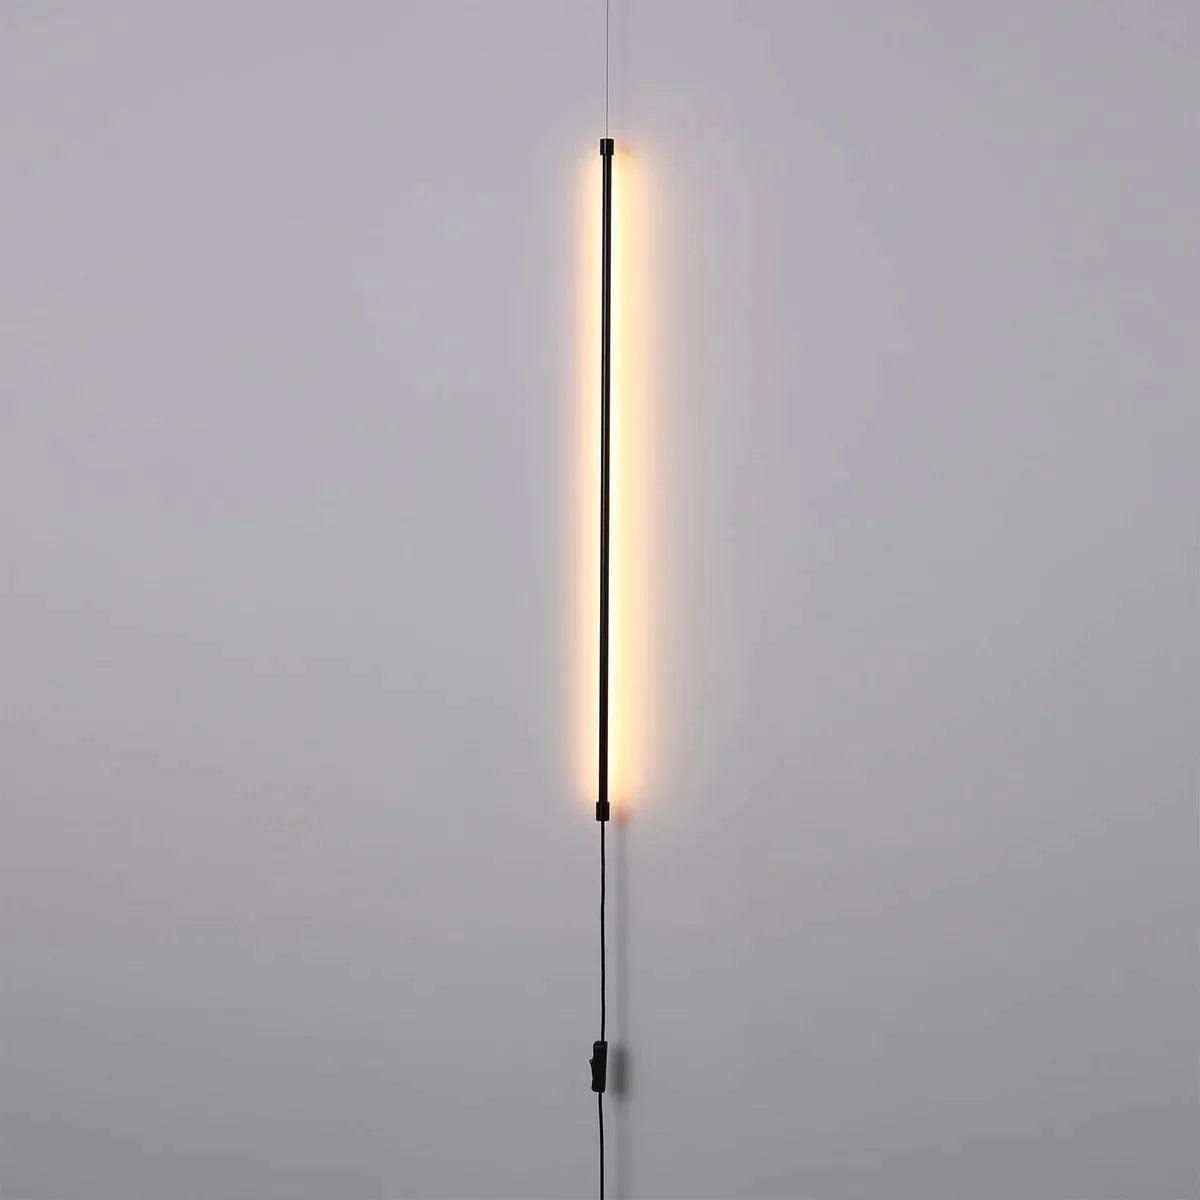 LIGHTSABER Pendant Light by The Light Library